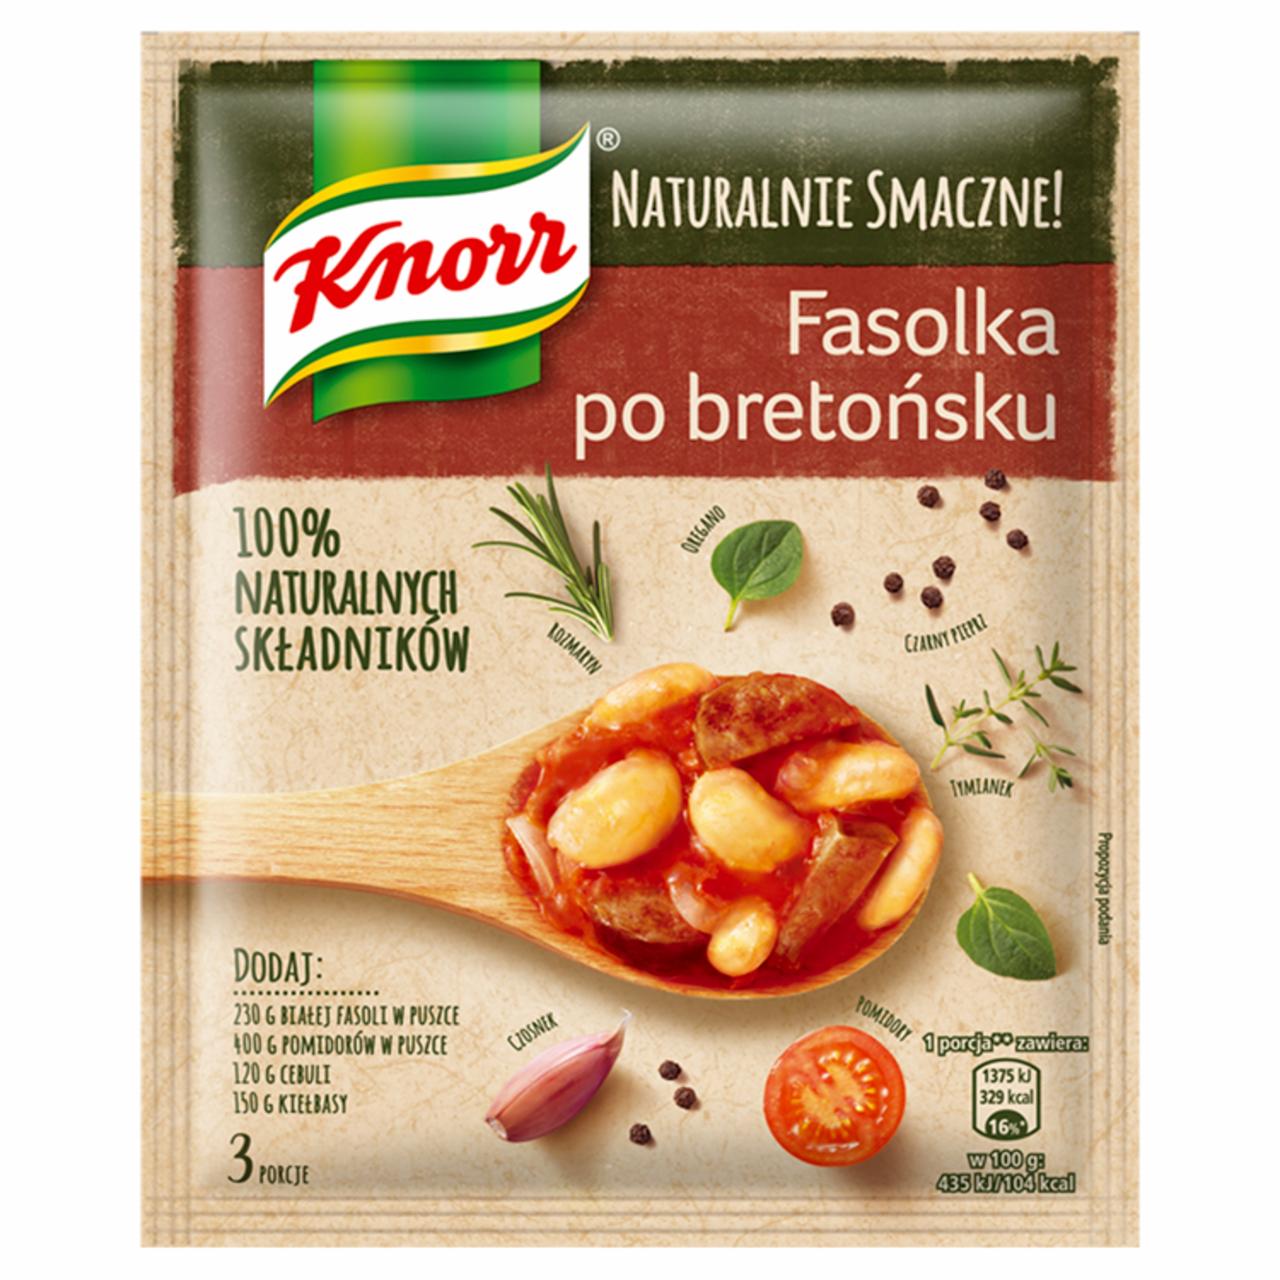 Zdjęcia - Knorr Fasolka po bretońsku 43 g